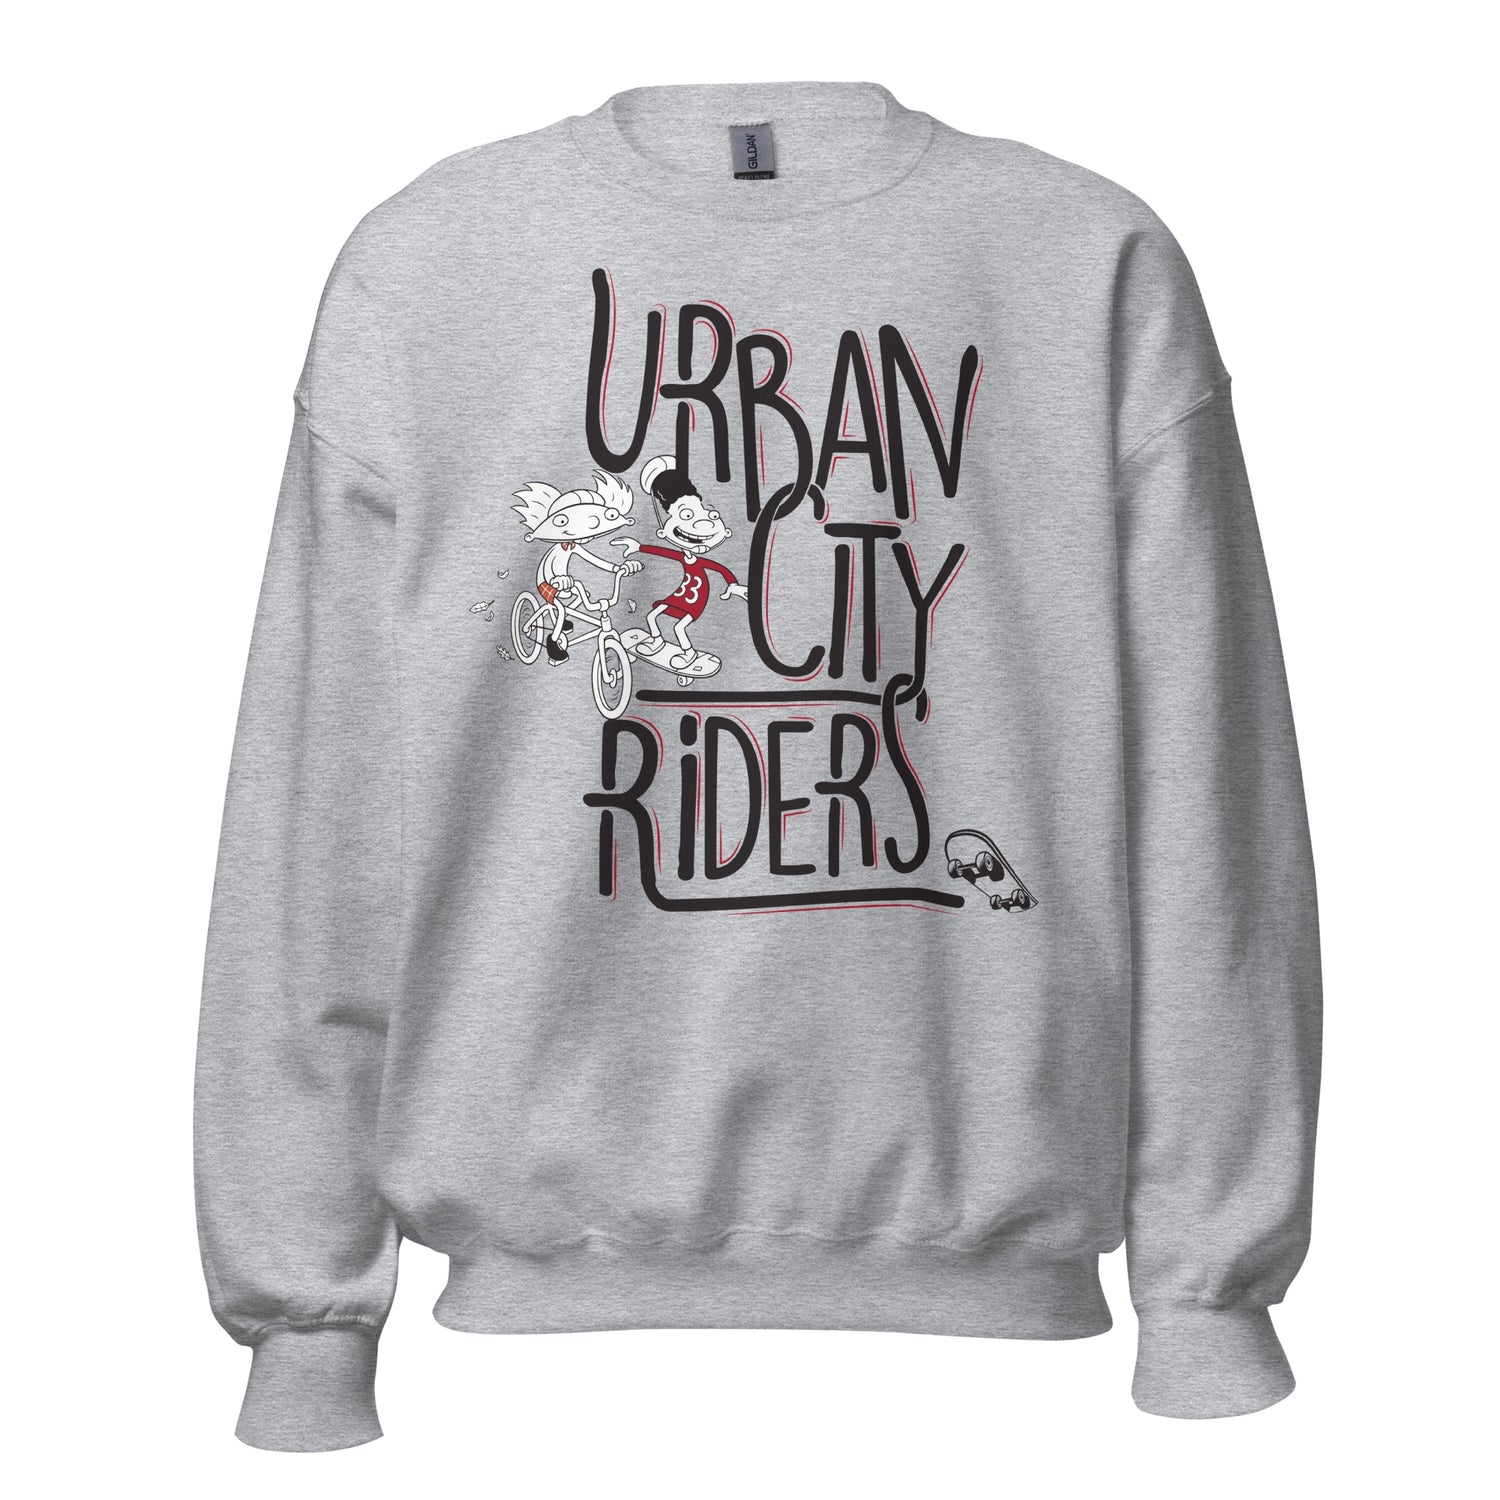 Hey Arnold! Urban City Riders Fleece Crewneck Sweatshirt